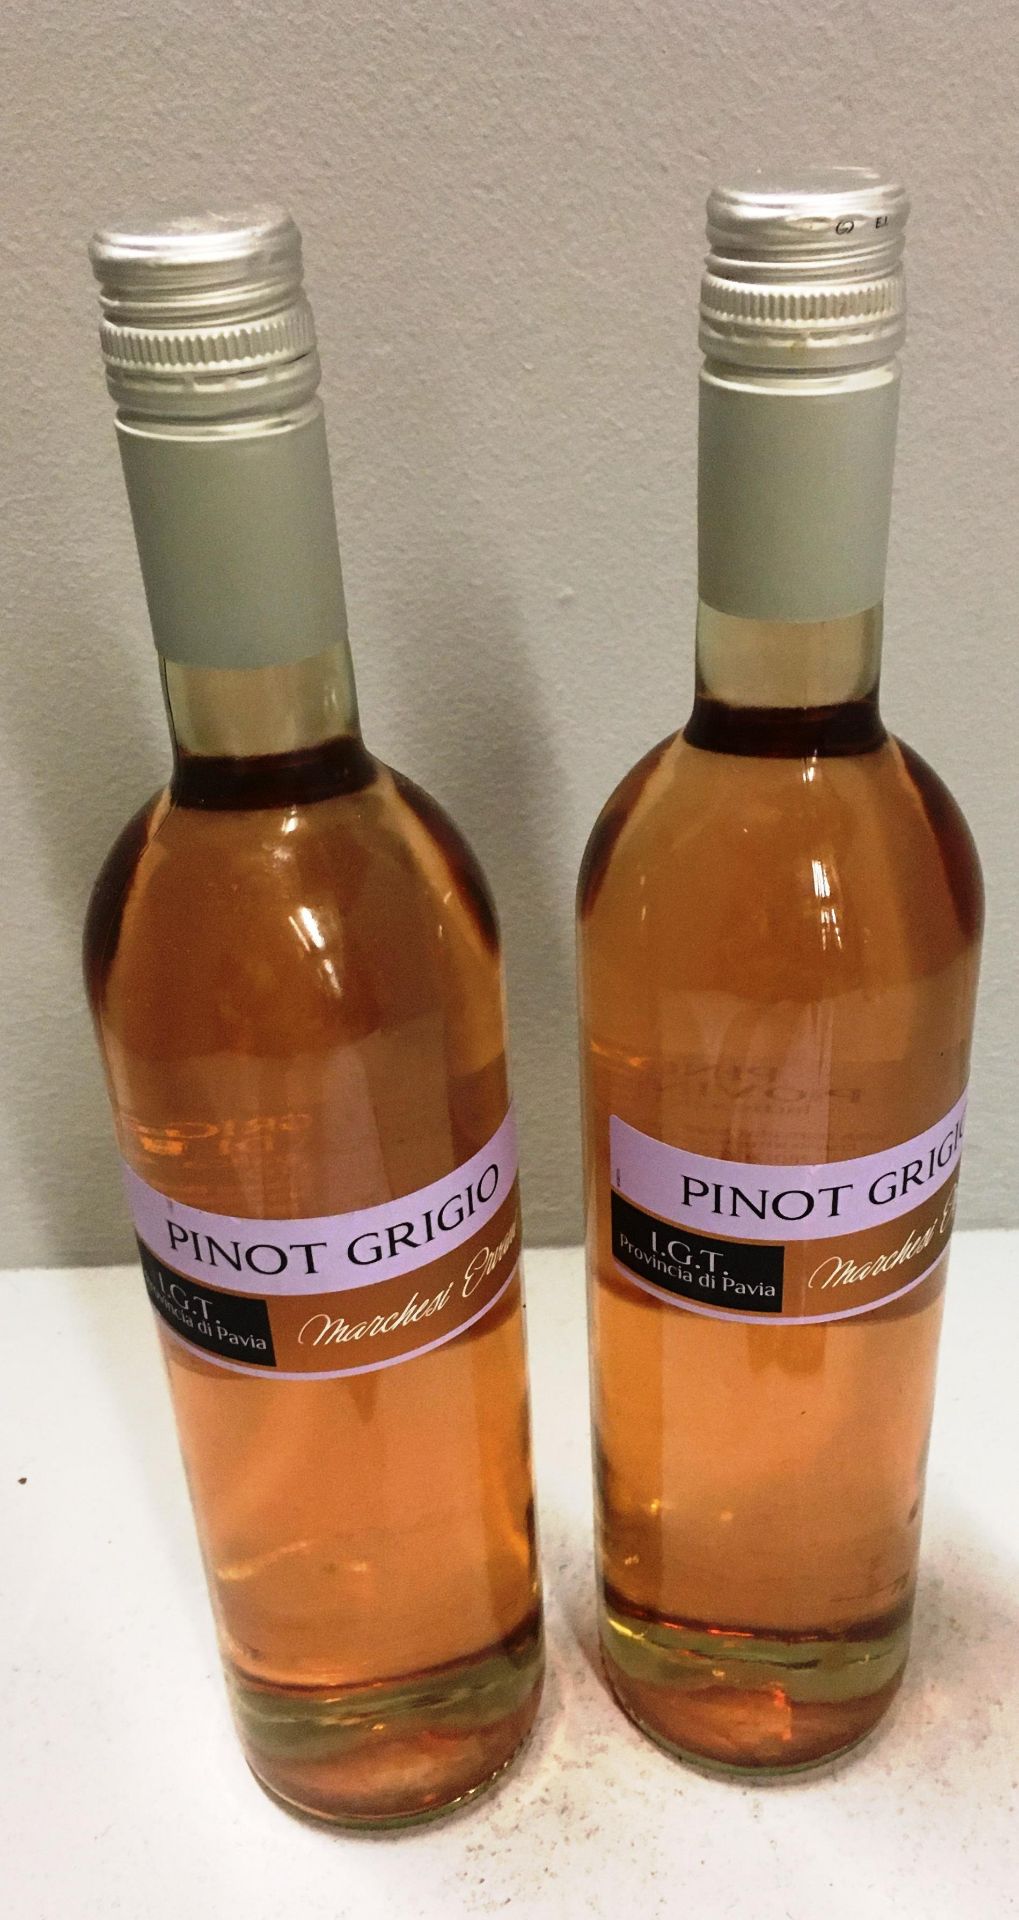 7 x 750ml bottles of Marchesi Ervani Pinot Grigio Rosato rose wine